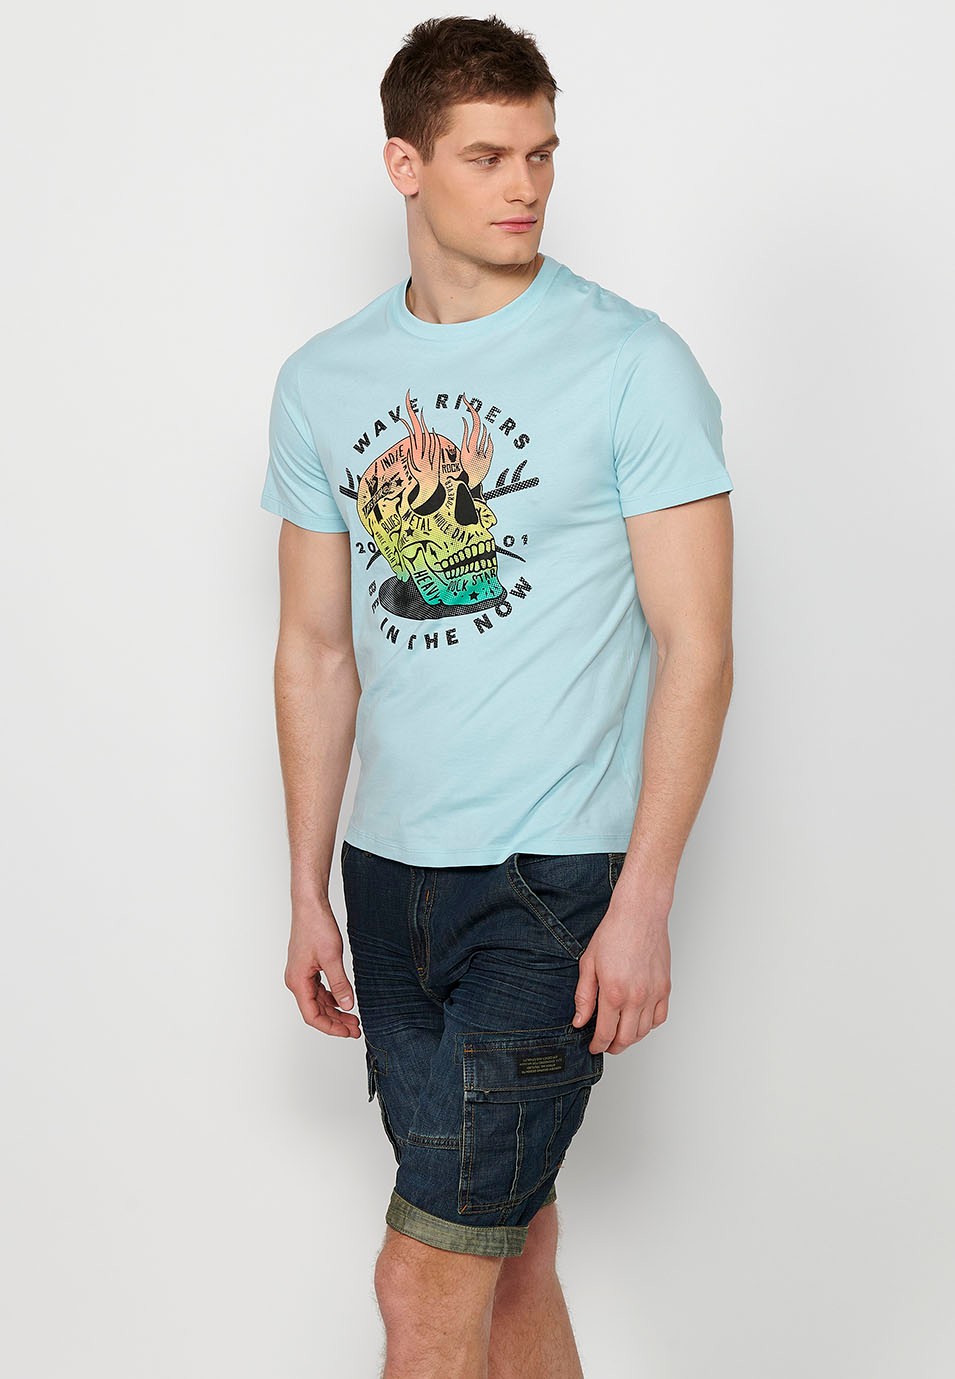 Blue printed cotton short sleeve t-shirt for men